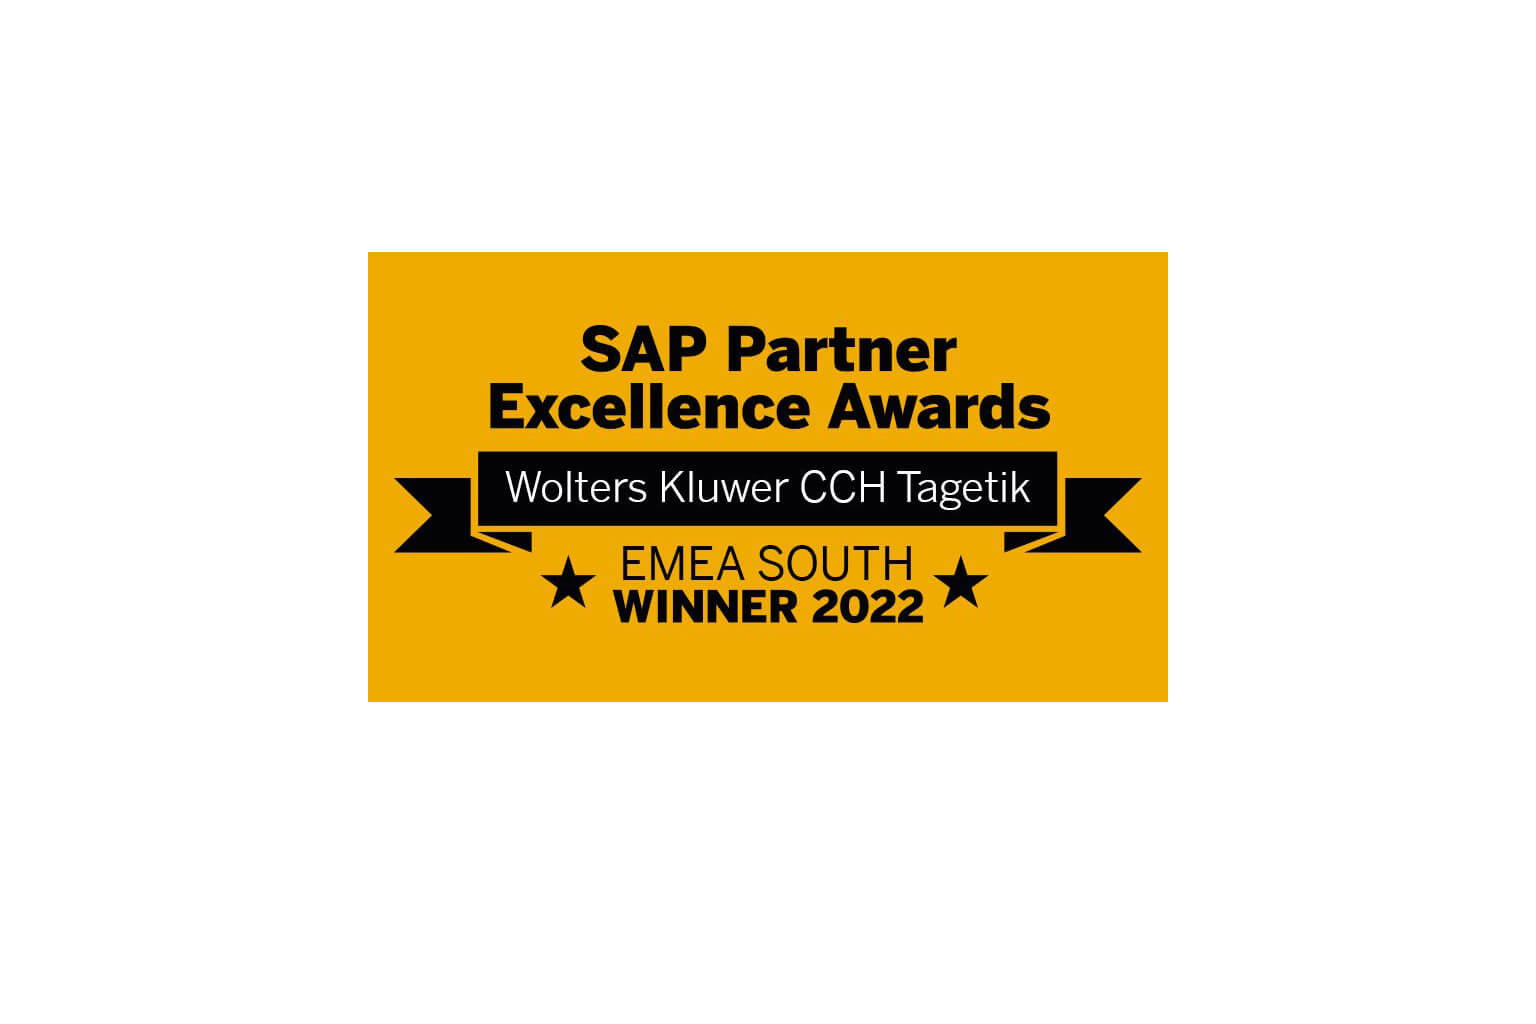 SAP EMEA South Partner Excellence Award 2022 for Technology Adoption